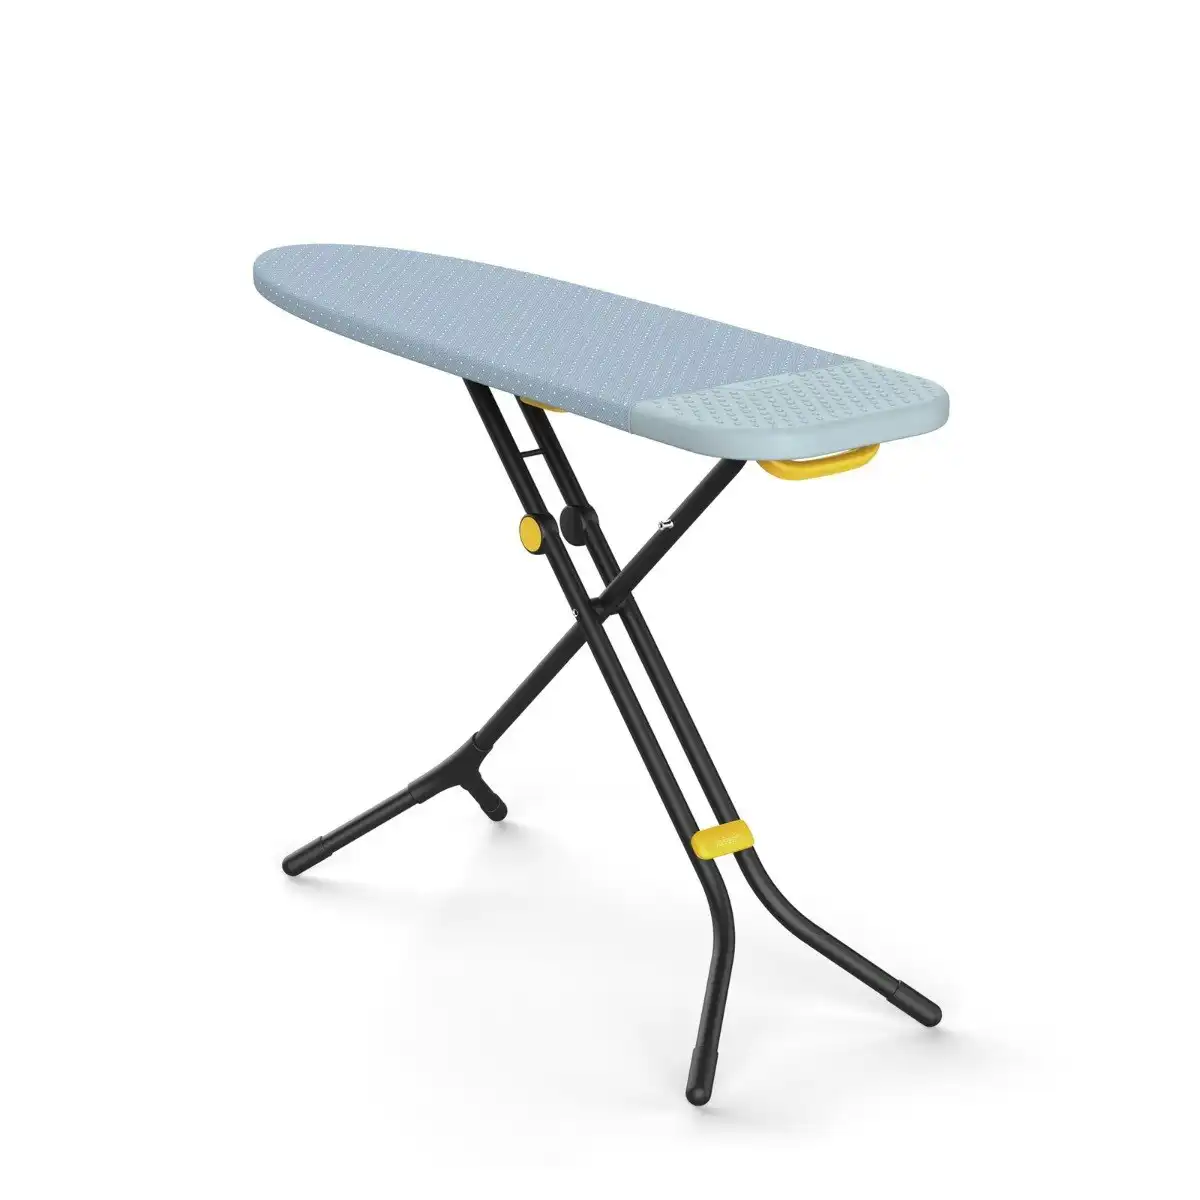 Joseph Joseph Glide Easy-store Ironing Board - Grey/Yellow